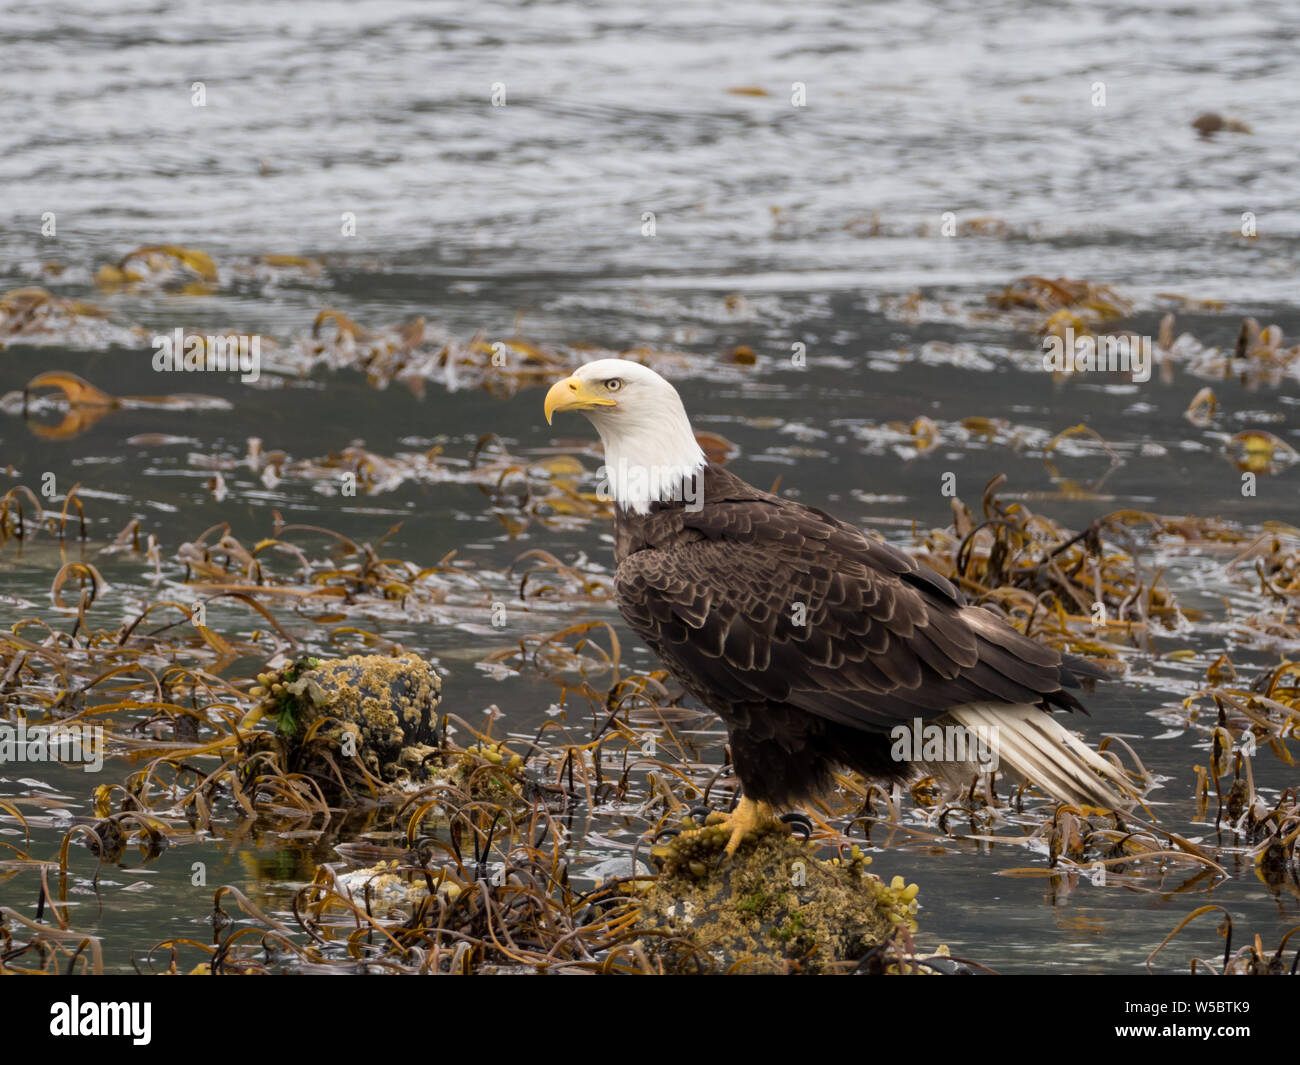 A bald eagle allows for close views in the fishing communtiy of Dutch Harbor, Aleutians, Alaska, USA Stock Photo